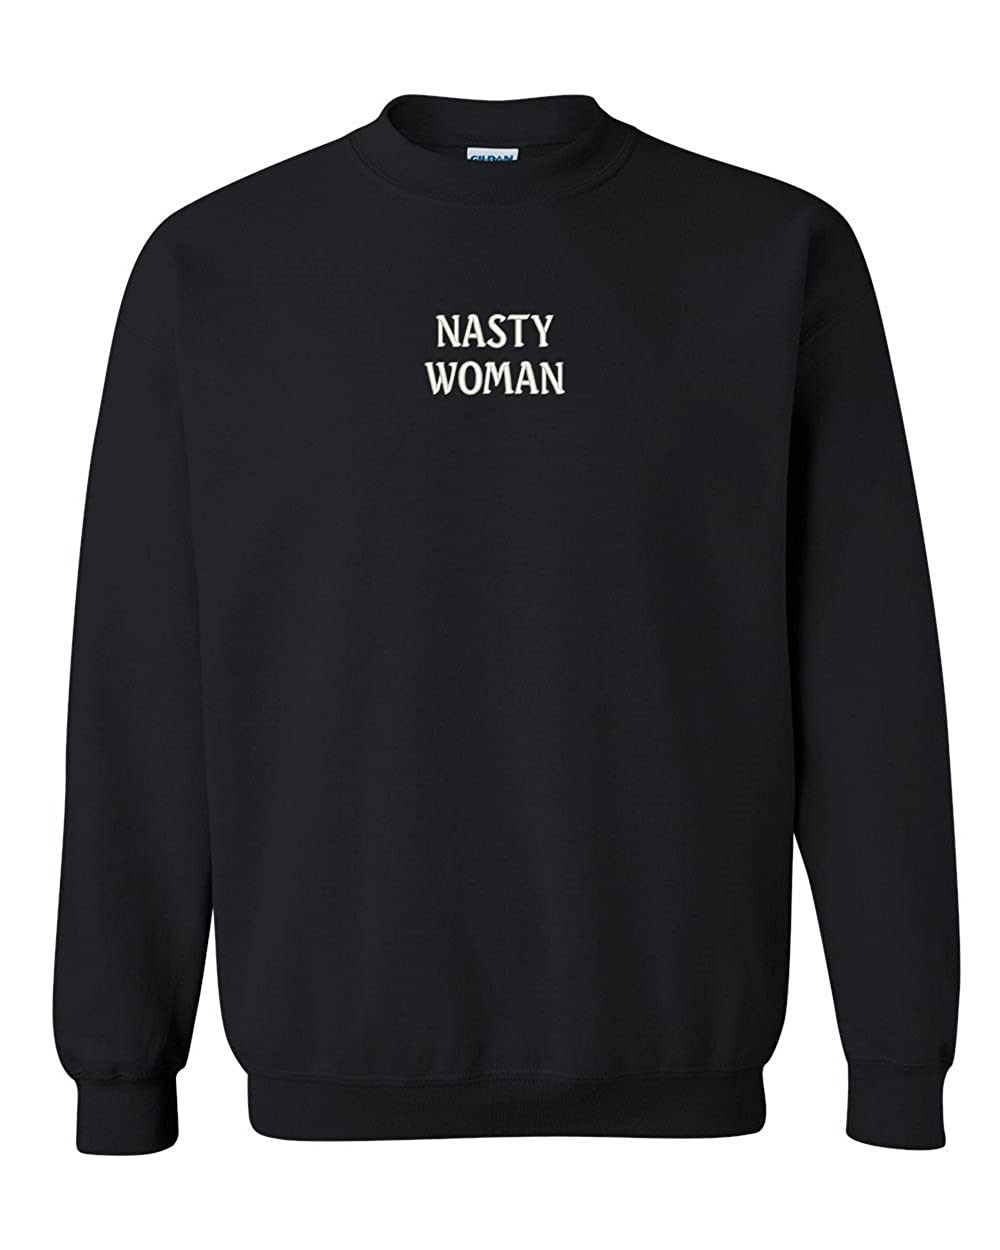 Trendy Apparel Shop Nasty Woman Embroidered Crewneck Sweatshirt